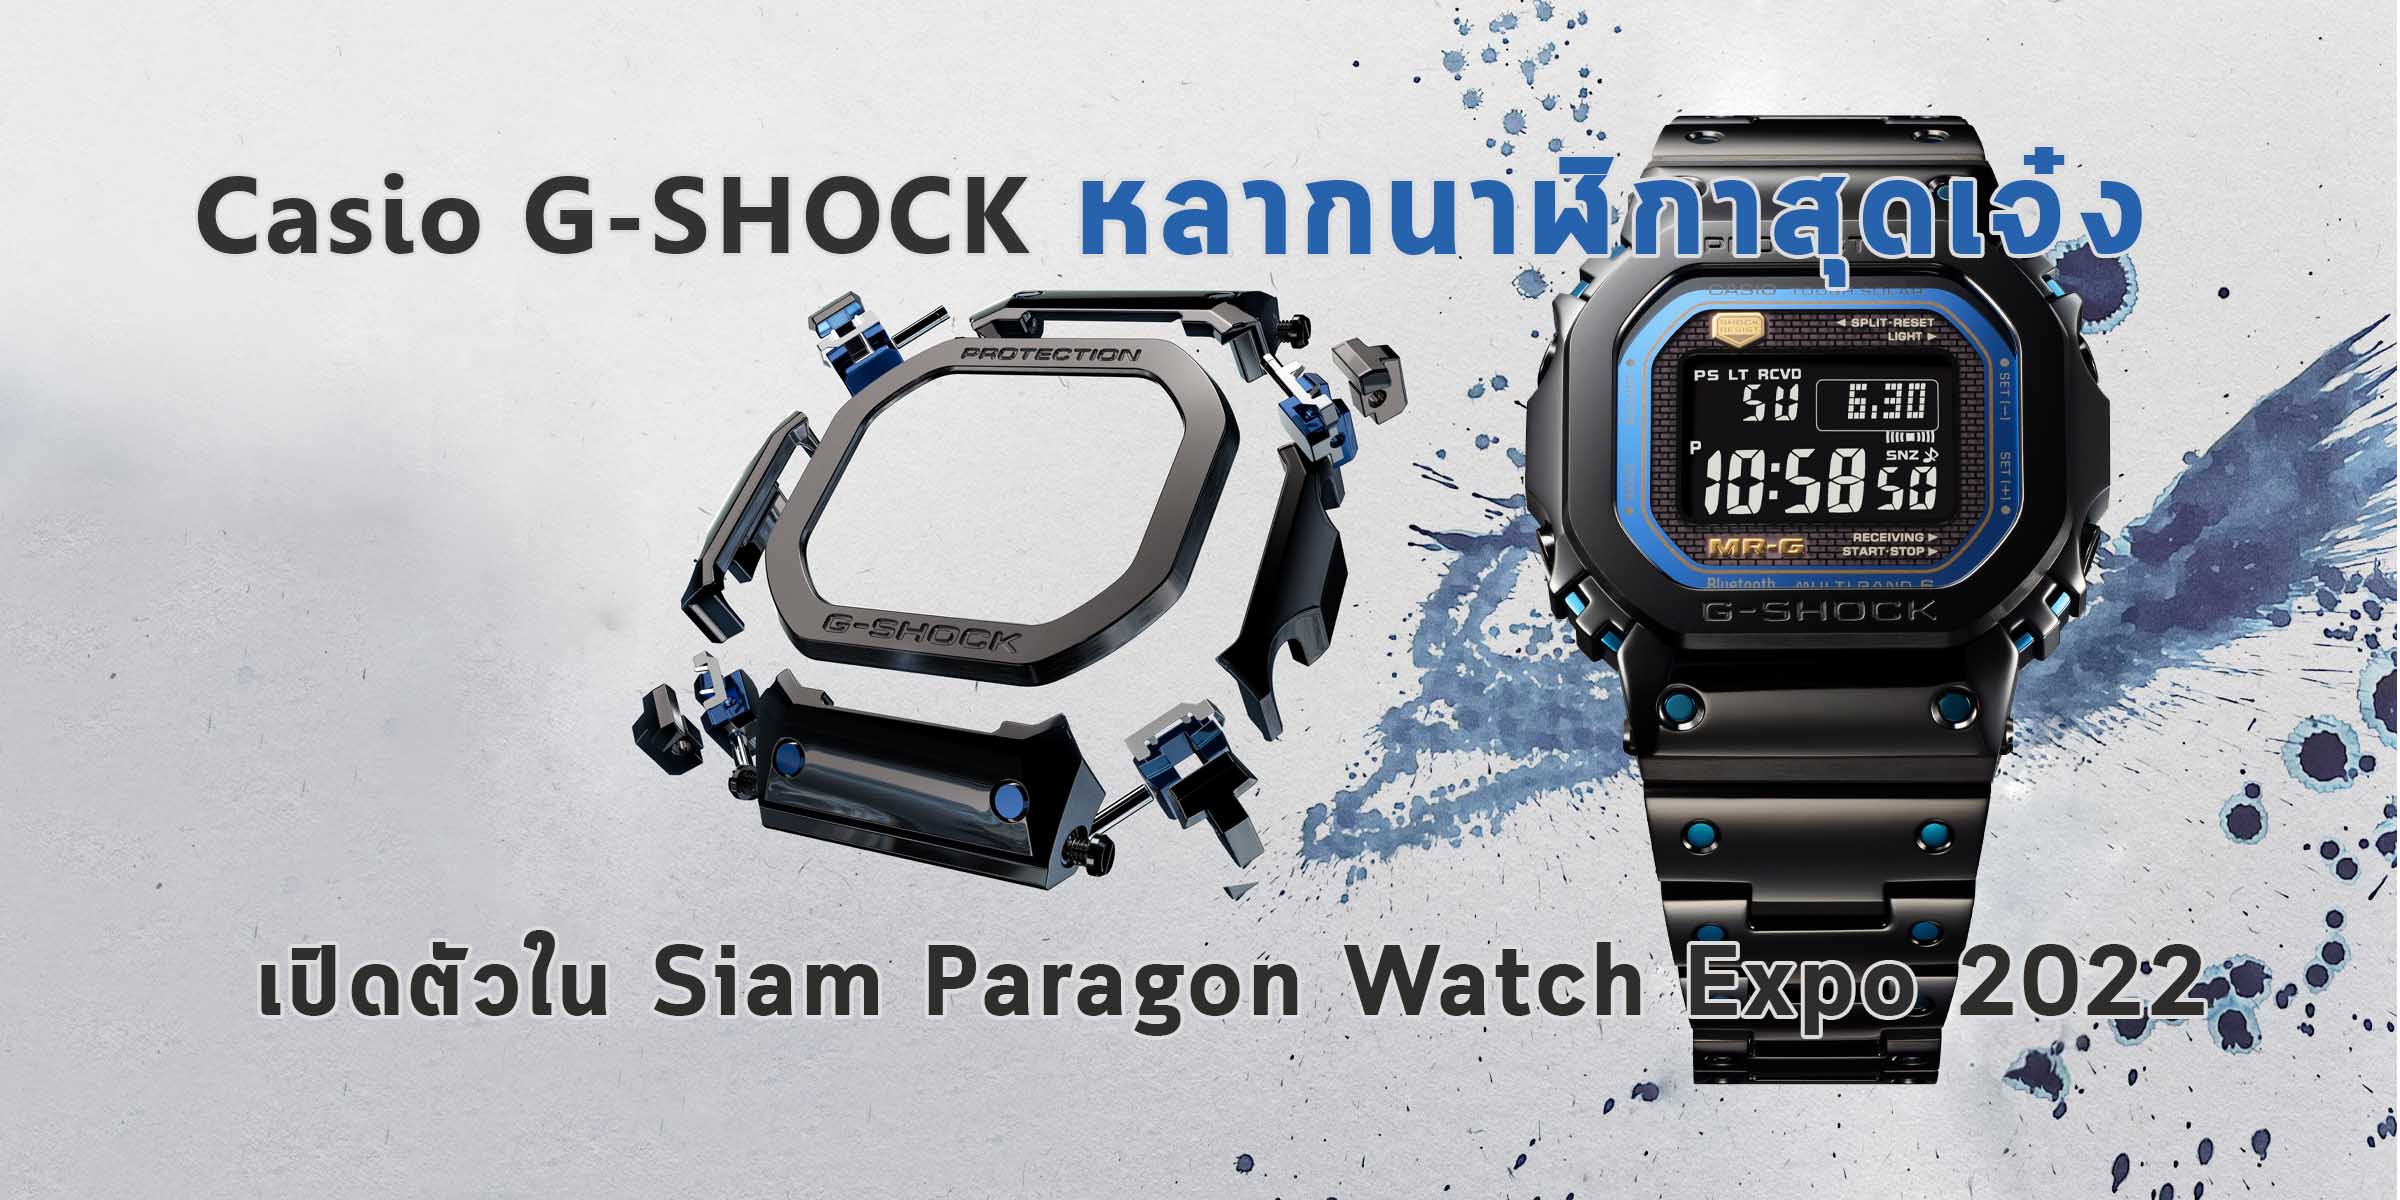 Casio G-SHOCK Siam Paragon Watch Expo 2022